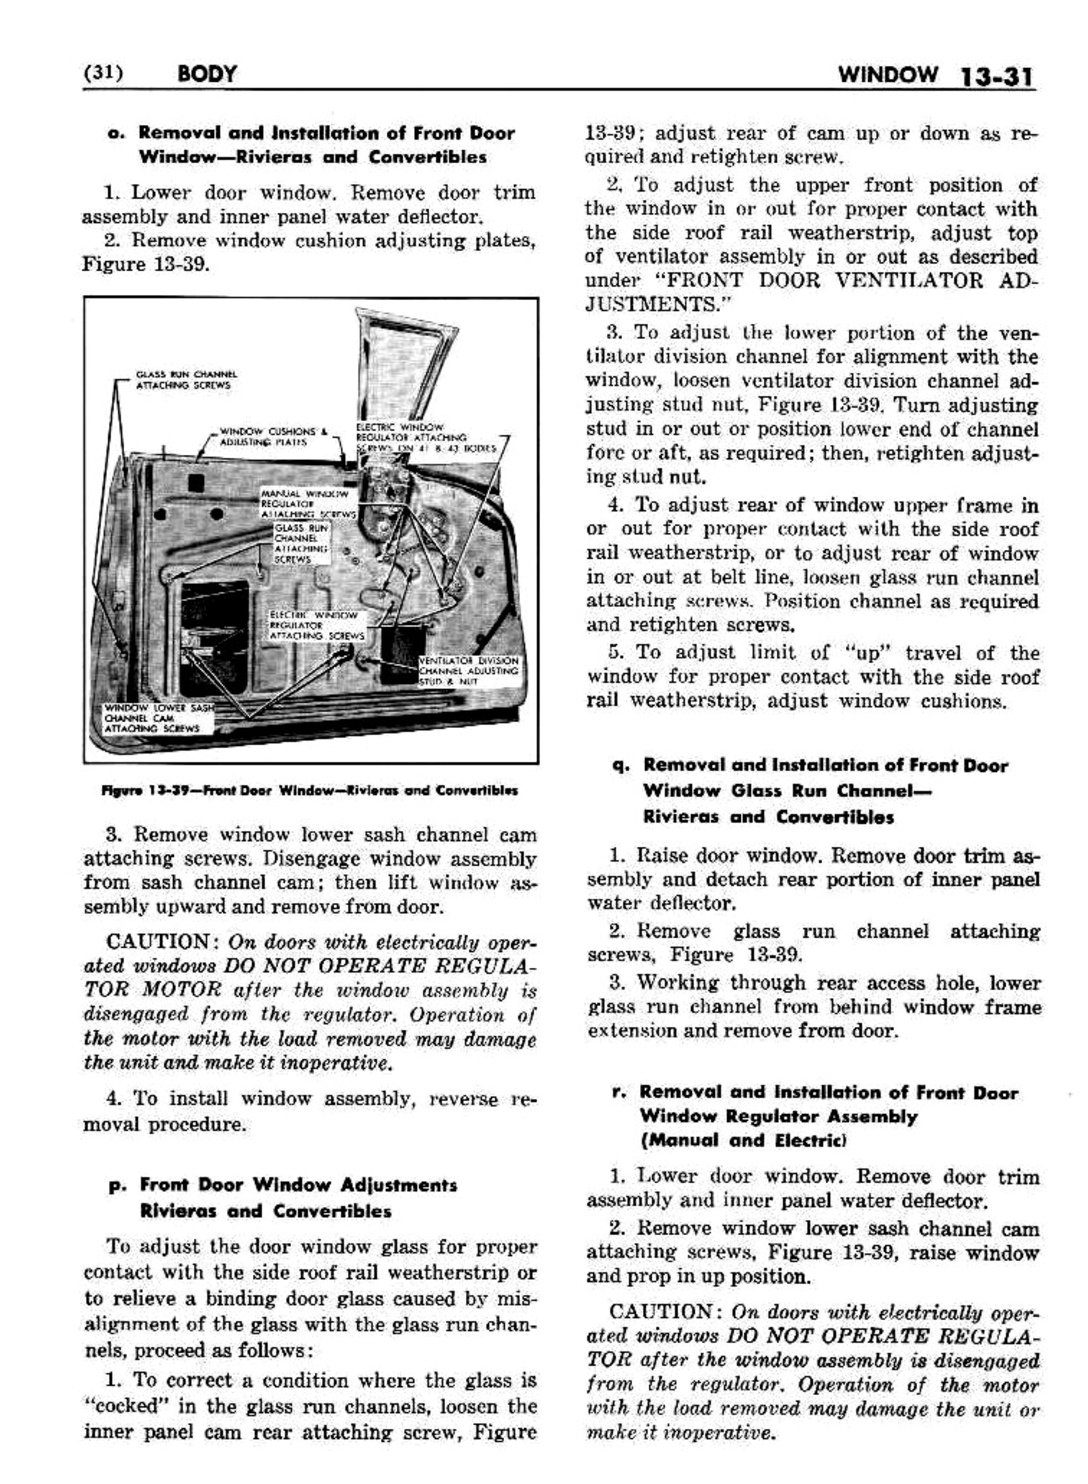 n_1958 Buick Body Service Manual-032-032.jpg